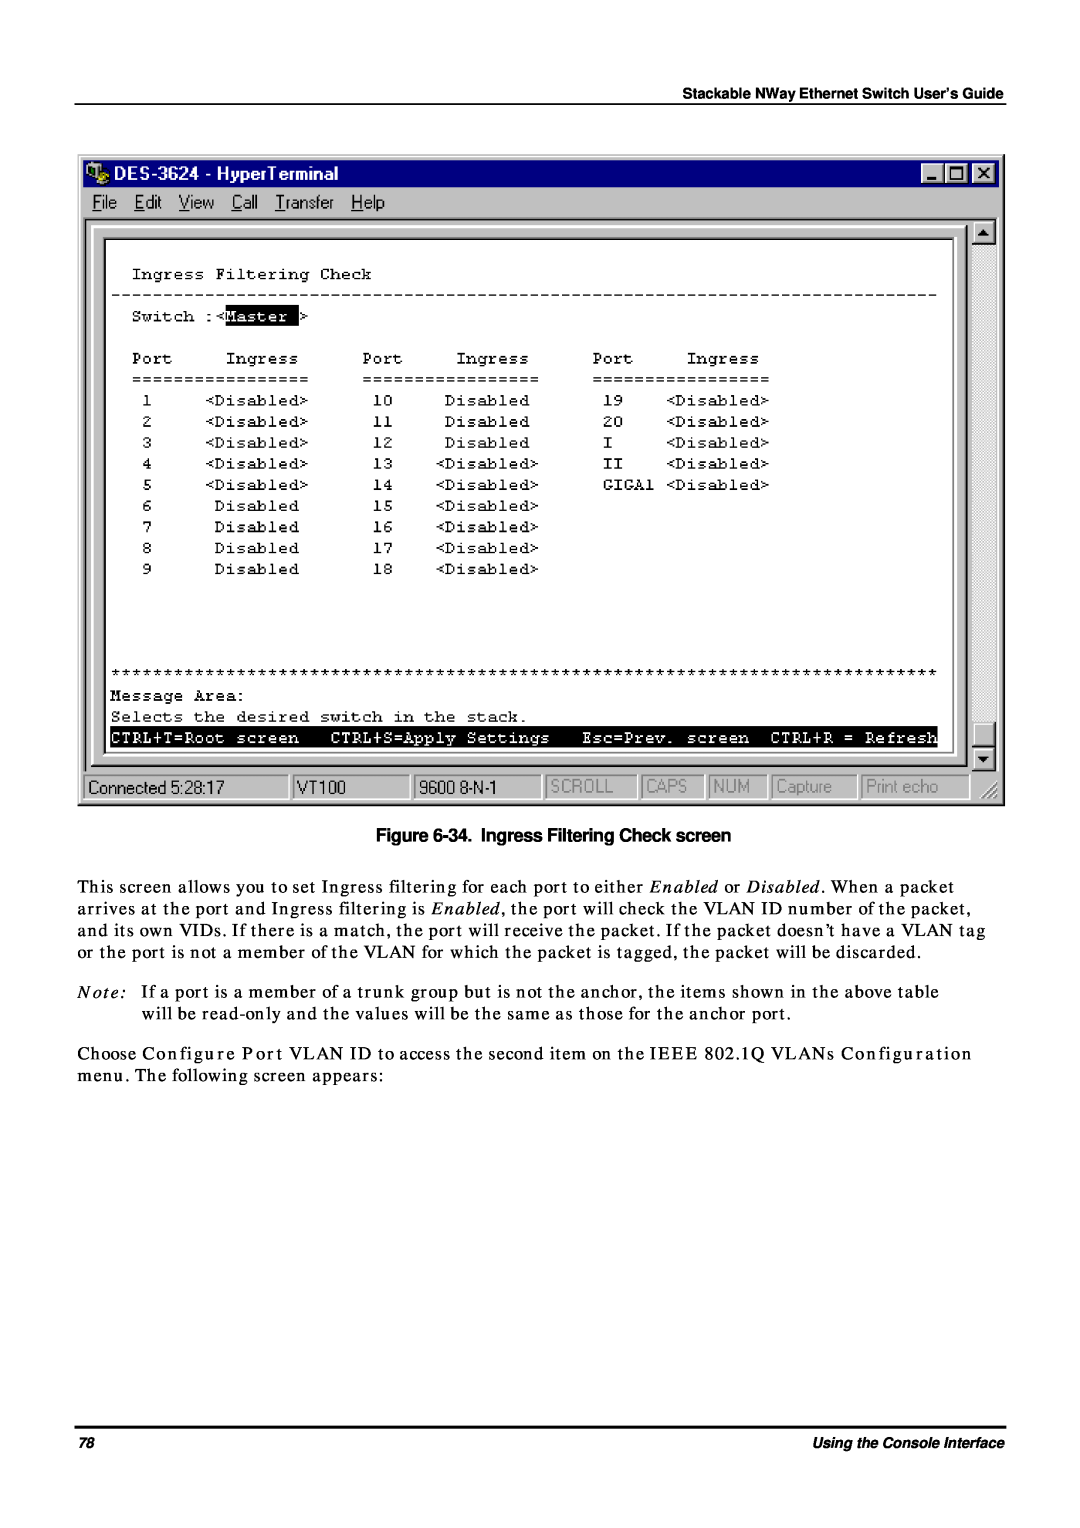 D-Link DES-3624 manual 34. Ingress Filtering Check screen 